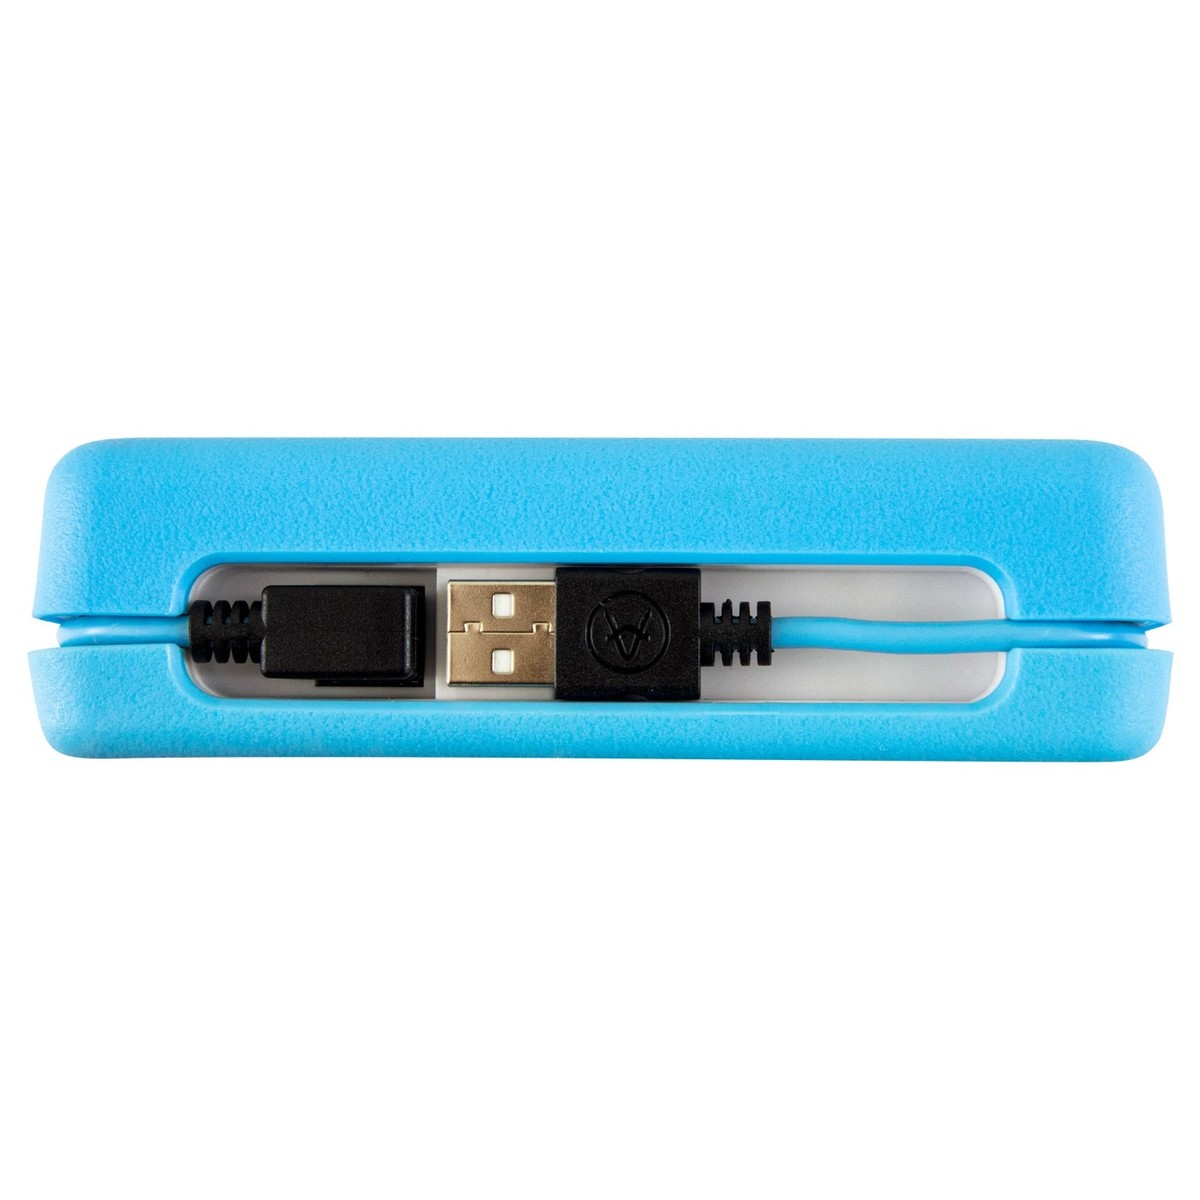 ARTURIA MICROLAB BLUE CONTROLLER TASTIERA 25 TASTI MINI MIDI – USB COLORE BLU 4